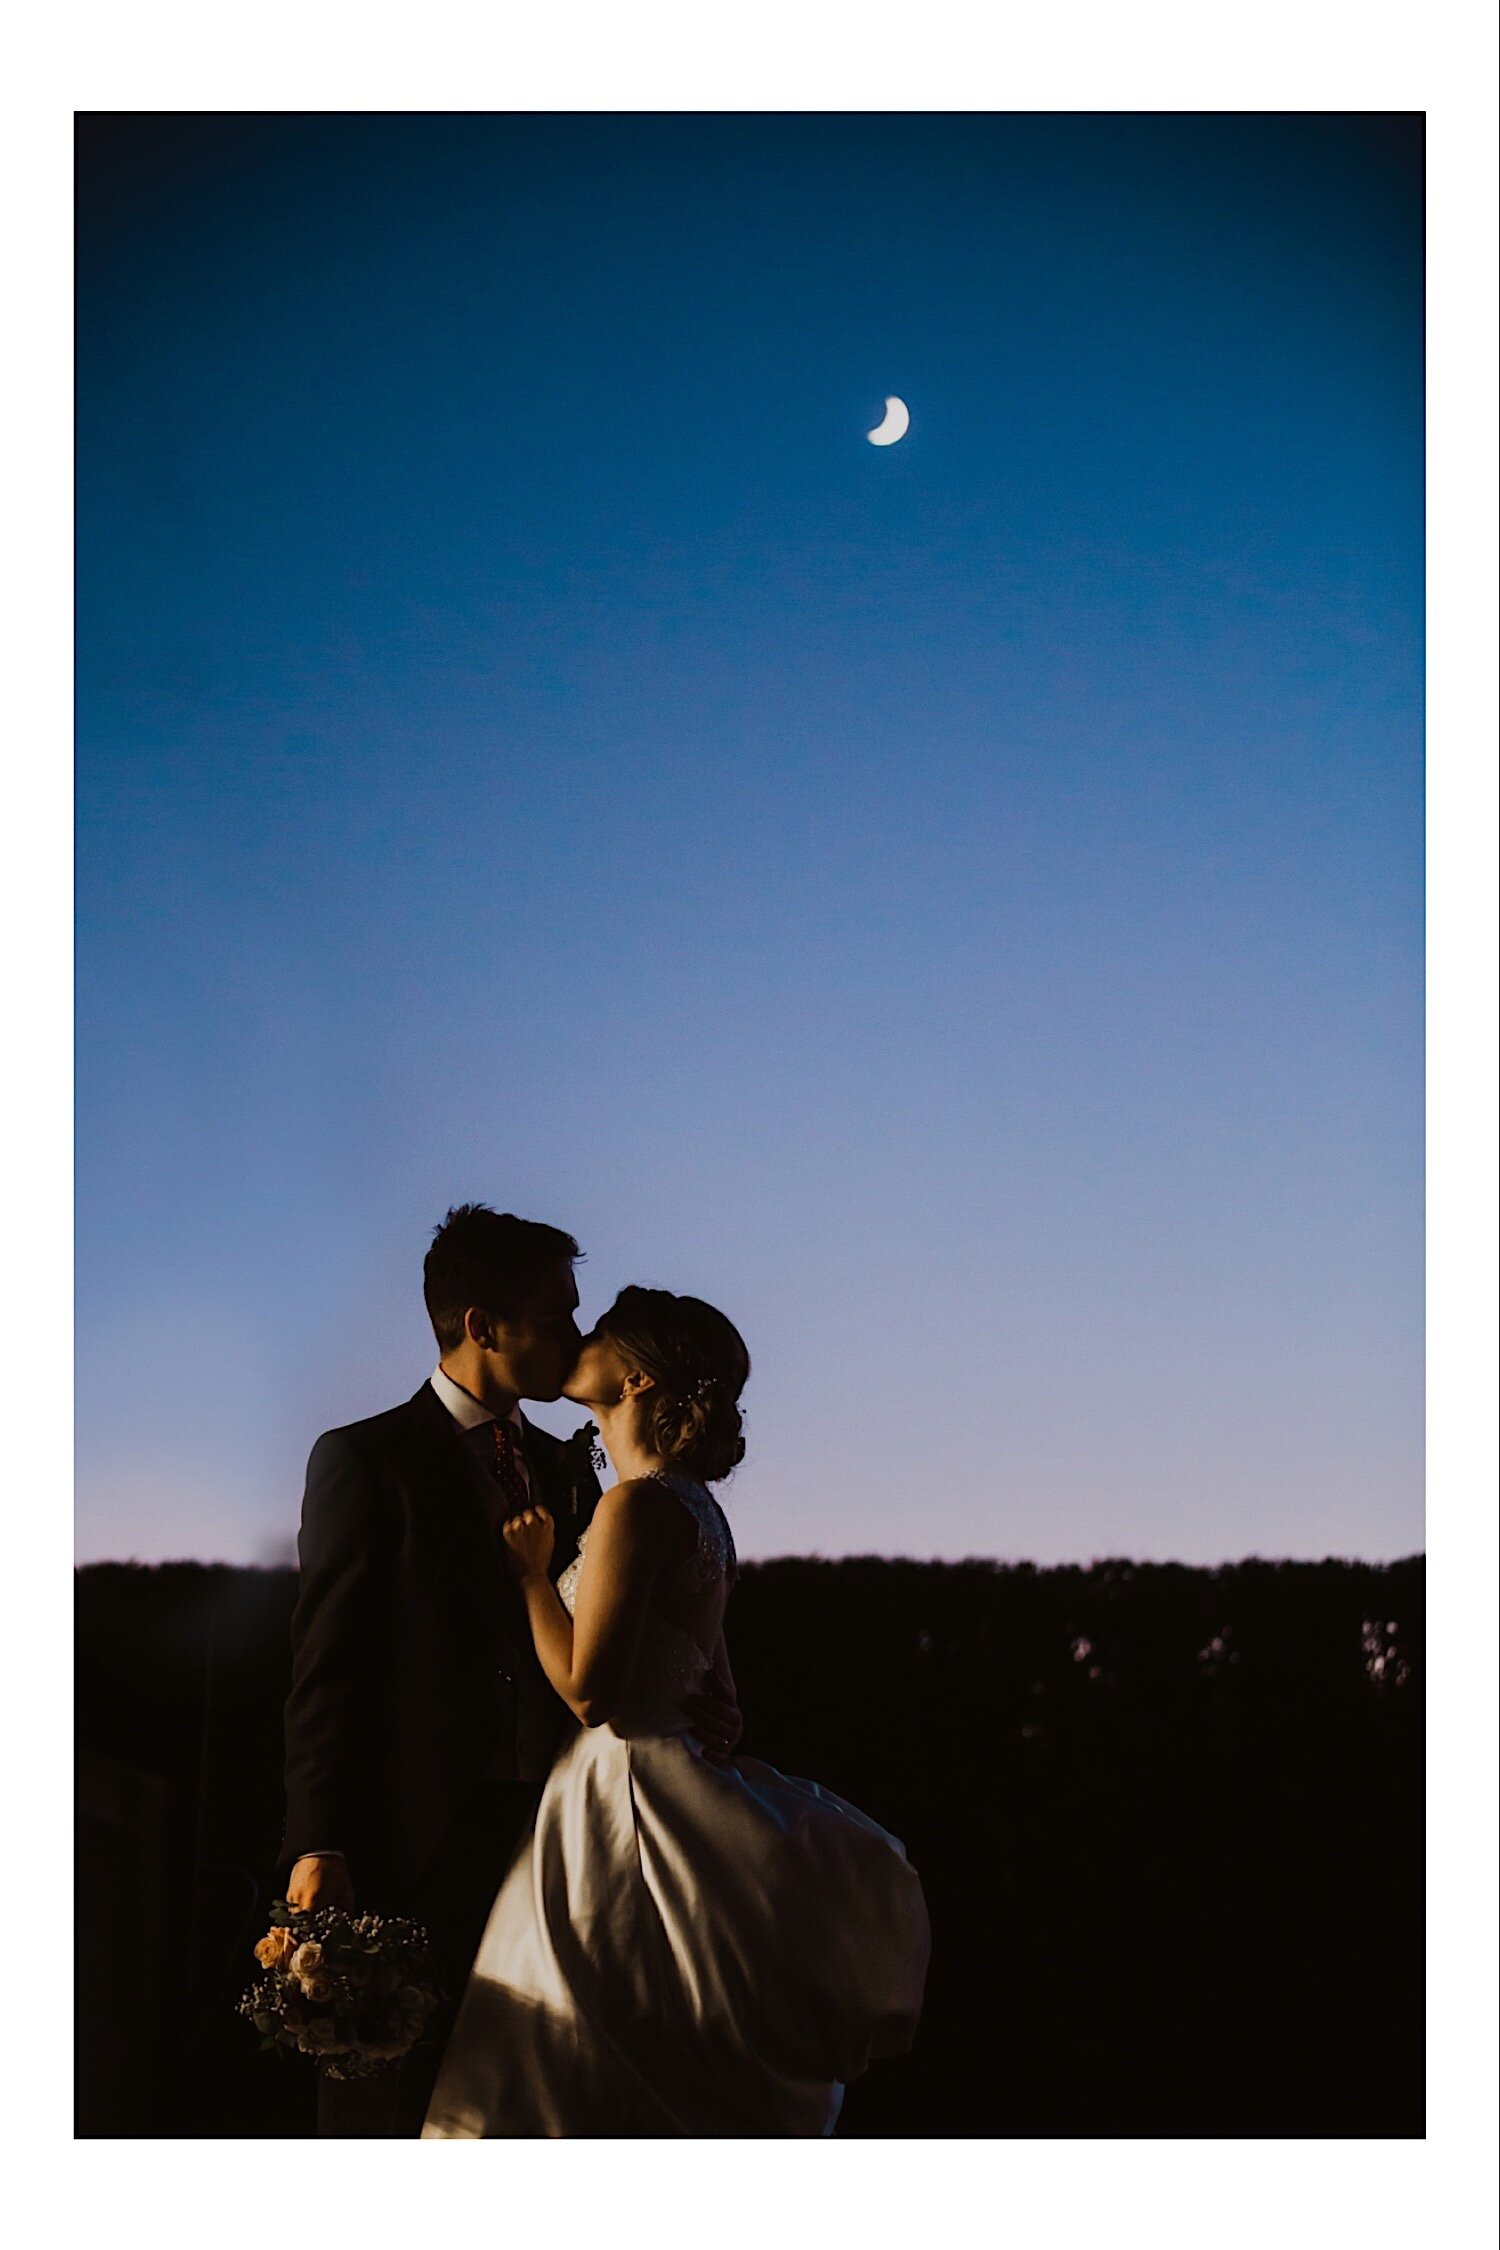 085_TWS-904_bride__couple_photography_henley_oxfordshire_millitary_crooked_moon_portraits_wedding_groom_winter_billet.jpg